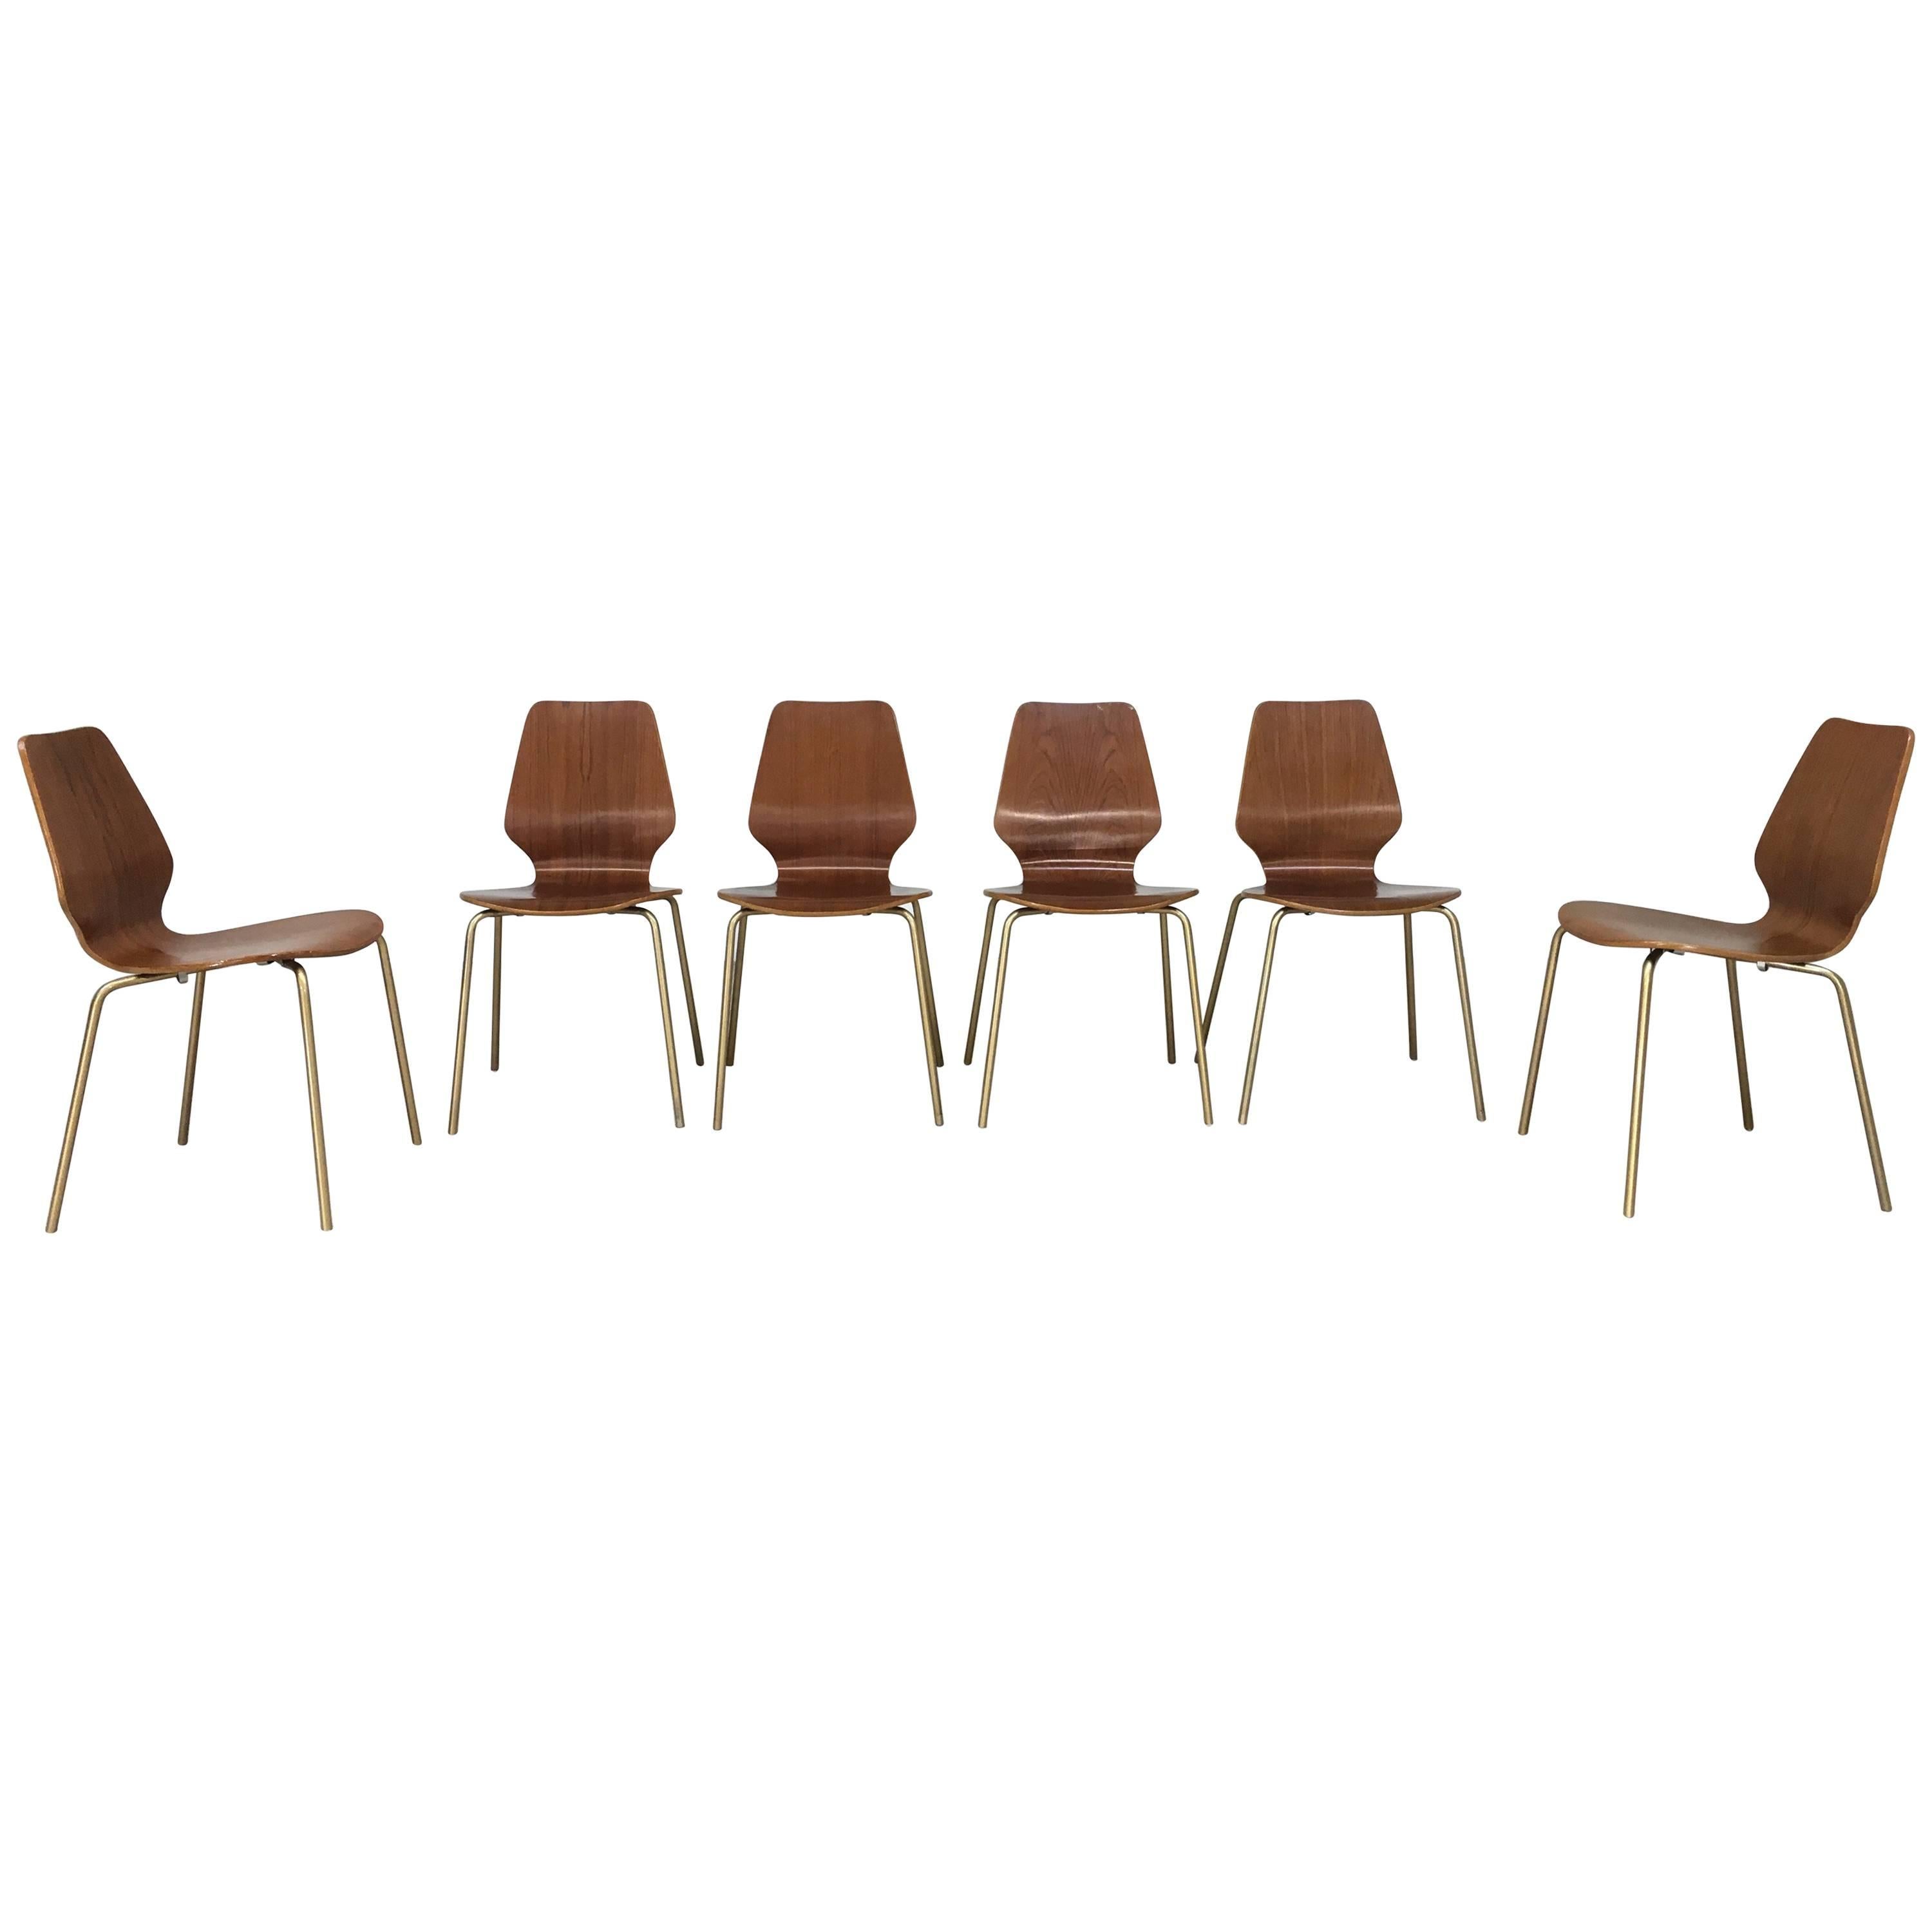 Oivind Iversen "City" Chairs Danish Modern Bent Teak Plywood Dining Chairs